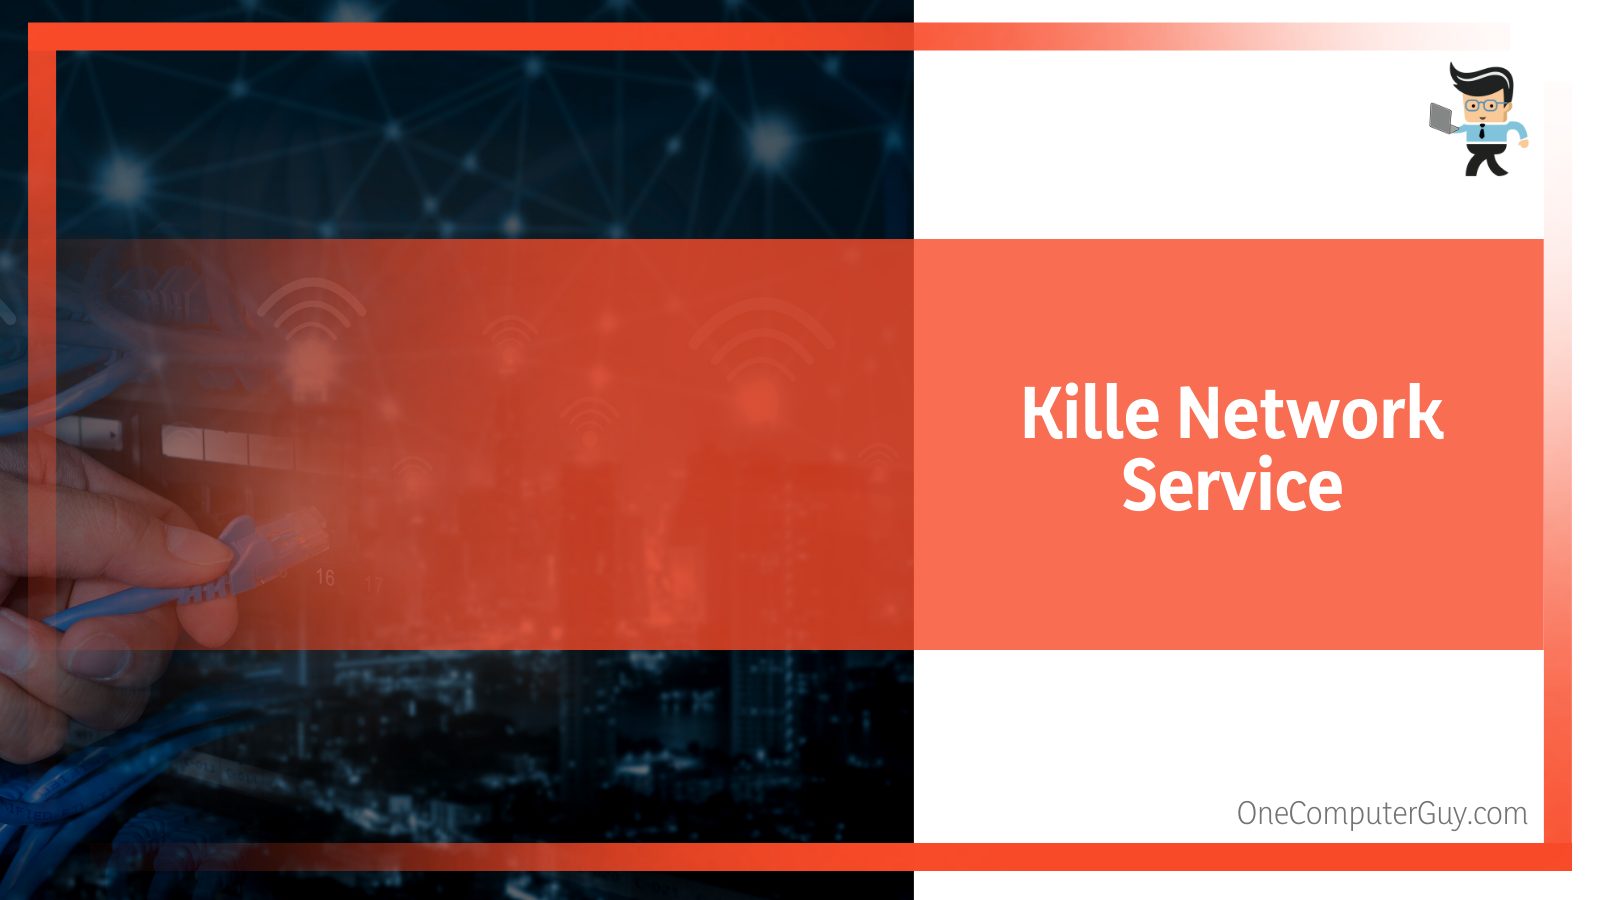 Killer Network Service, a virus?